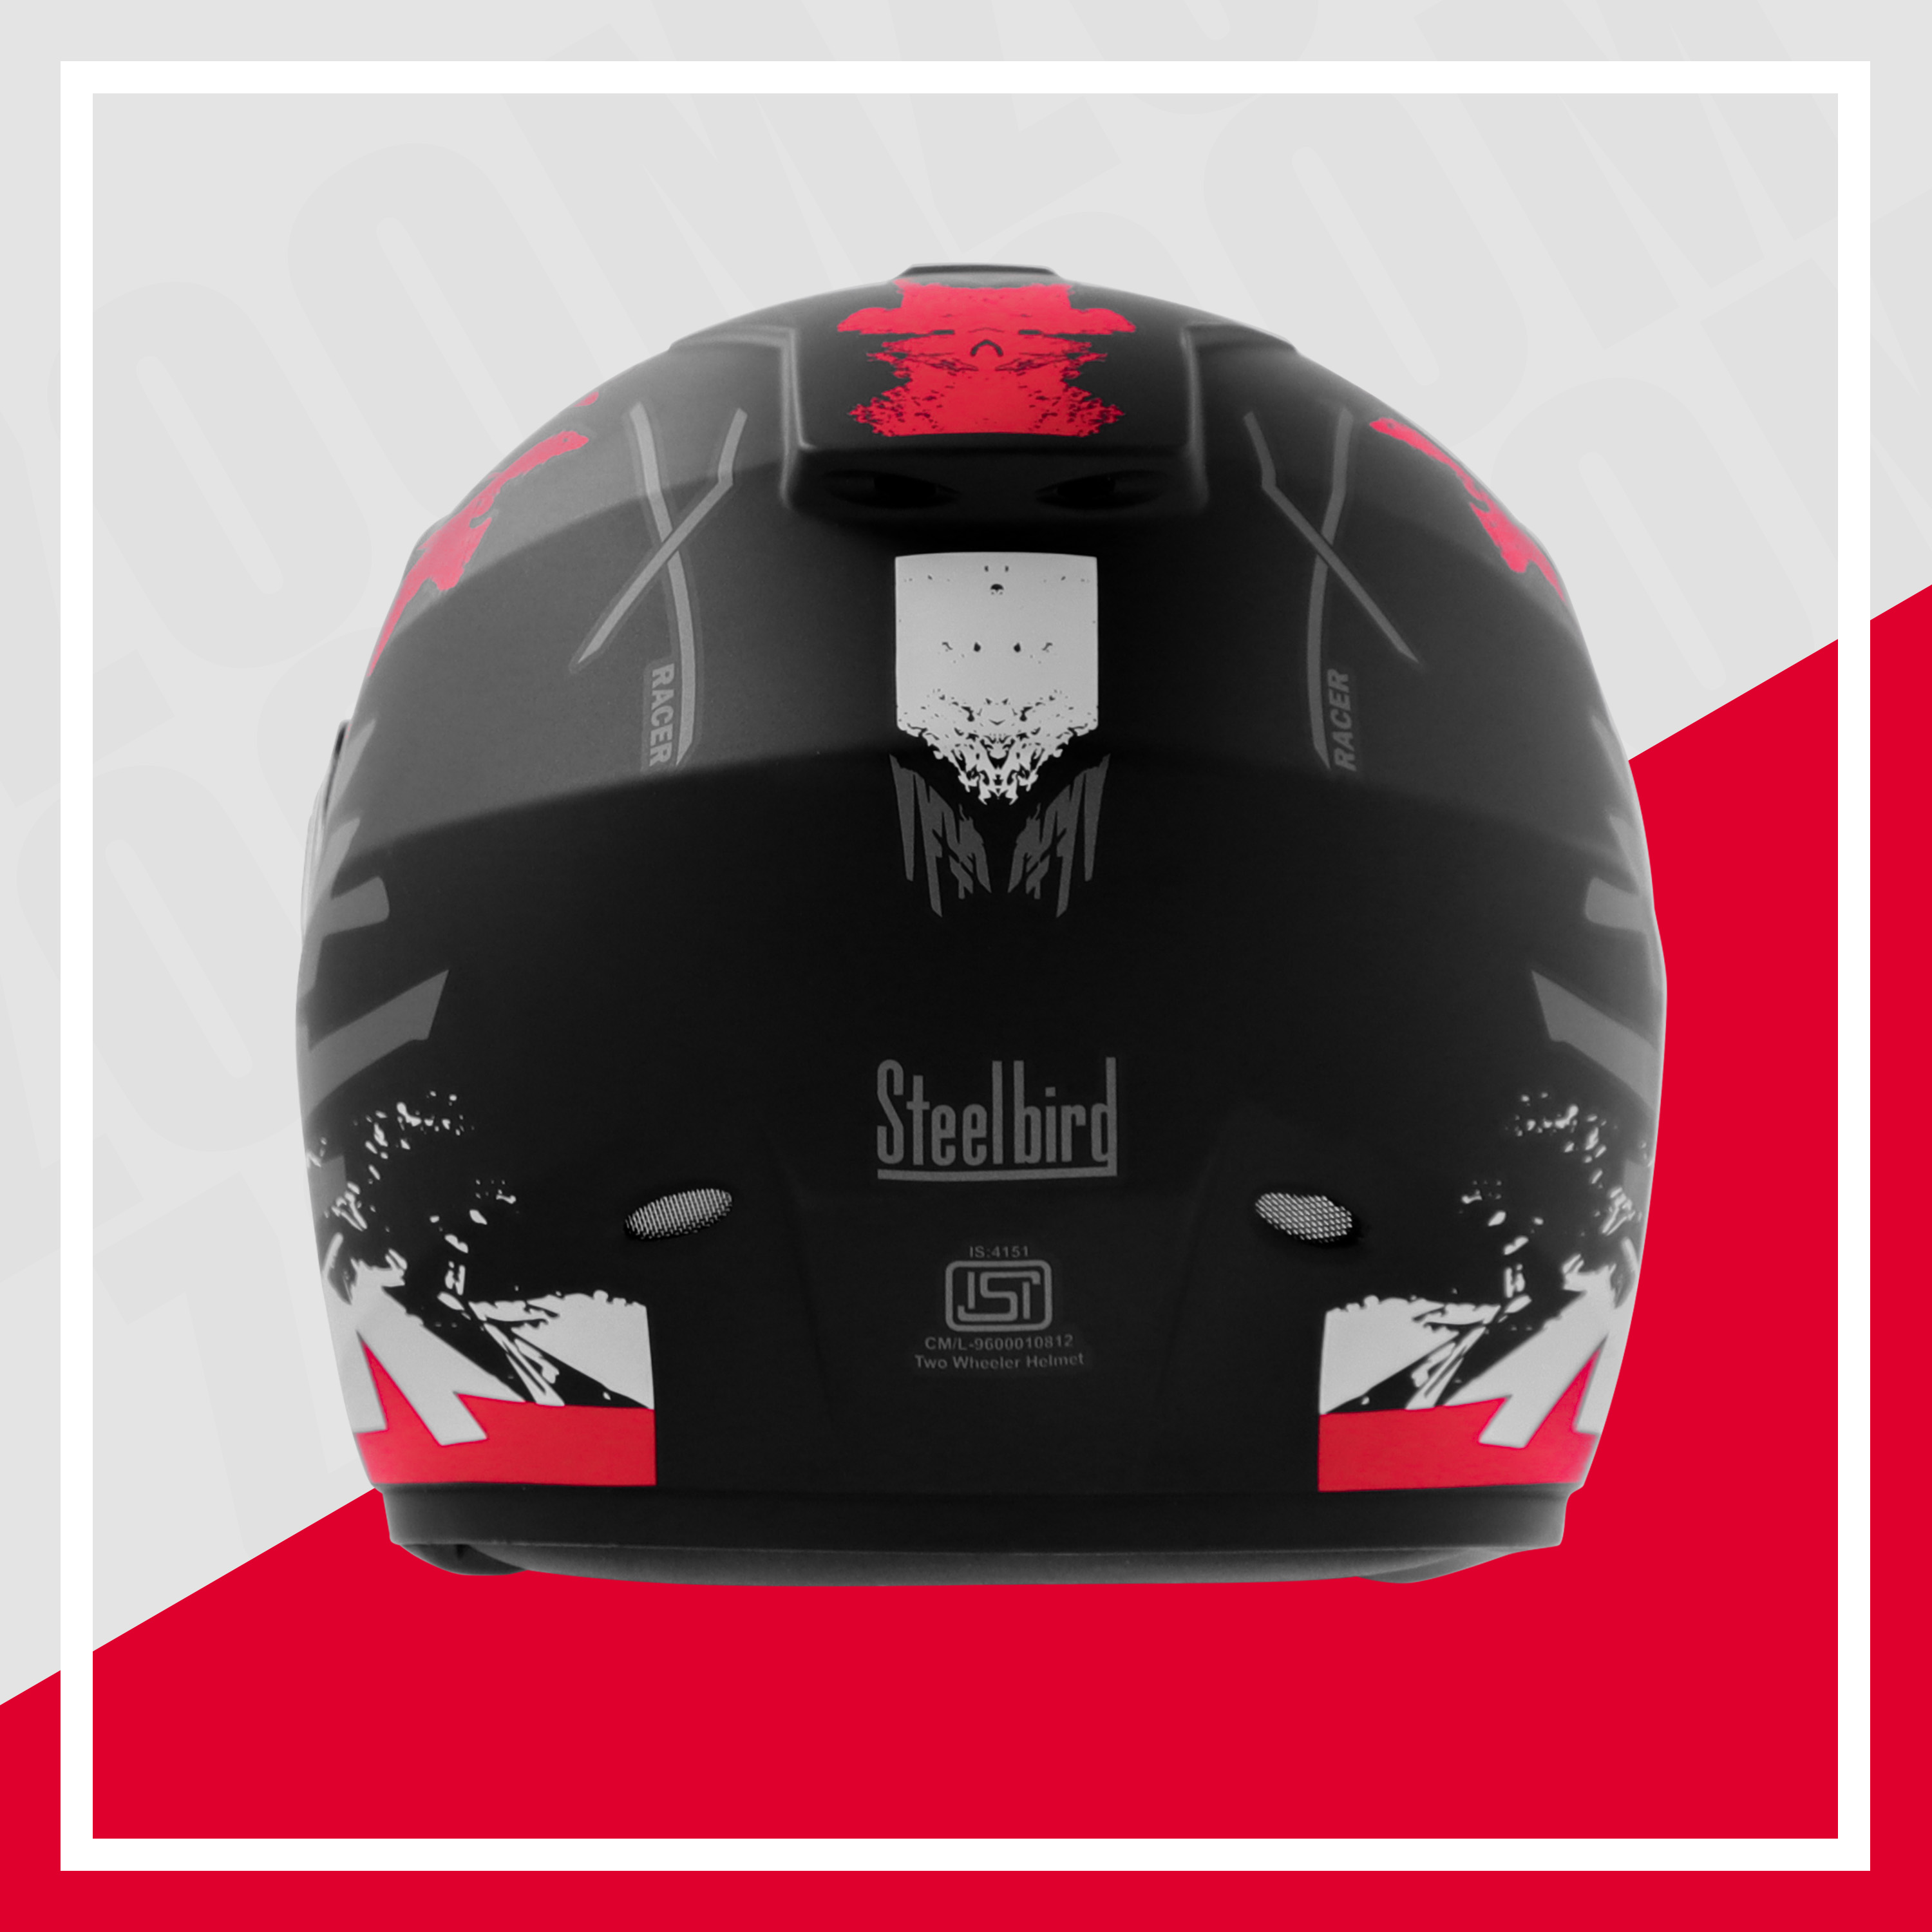 Steelbird SBH-11 Zoom Racer ISI Certified Full Face Graphic Helmet For Men And Women (Matt Black Red With Chrome Rainbow Visor)